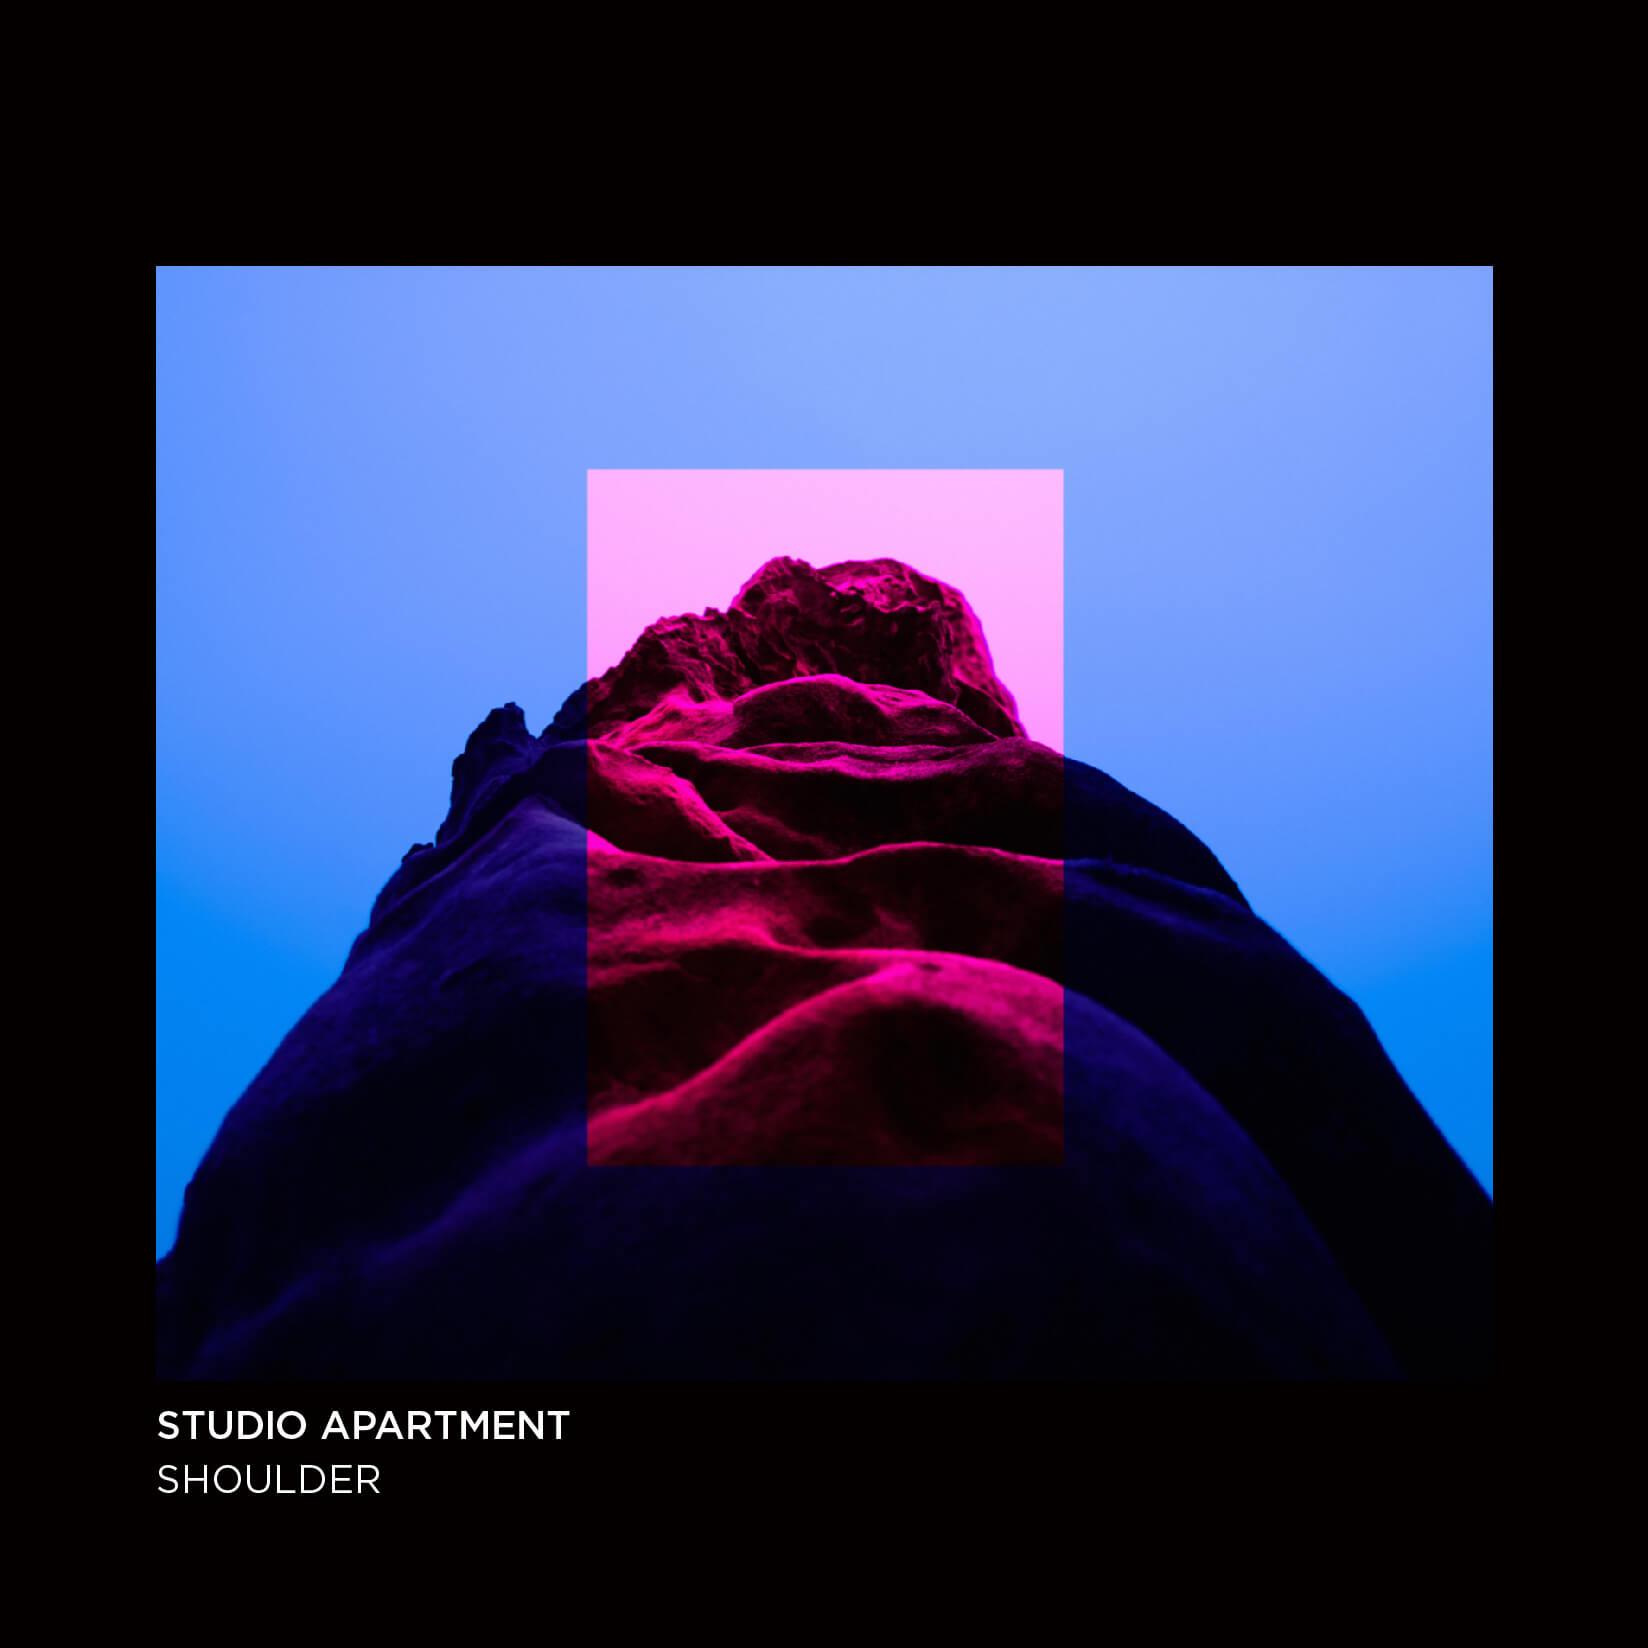 STUDIO APARTMENT、6年半ぶりとなる新曲 『Shoulder』MV SPOT公開＆過去アルバム収録曲の期間限定無料配信が決定